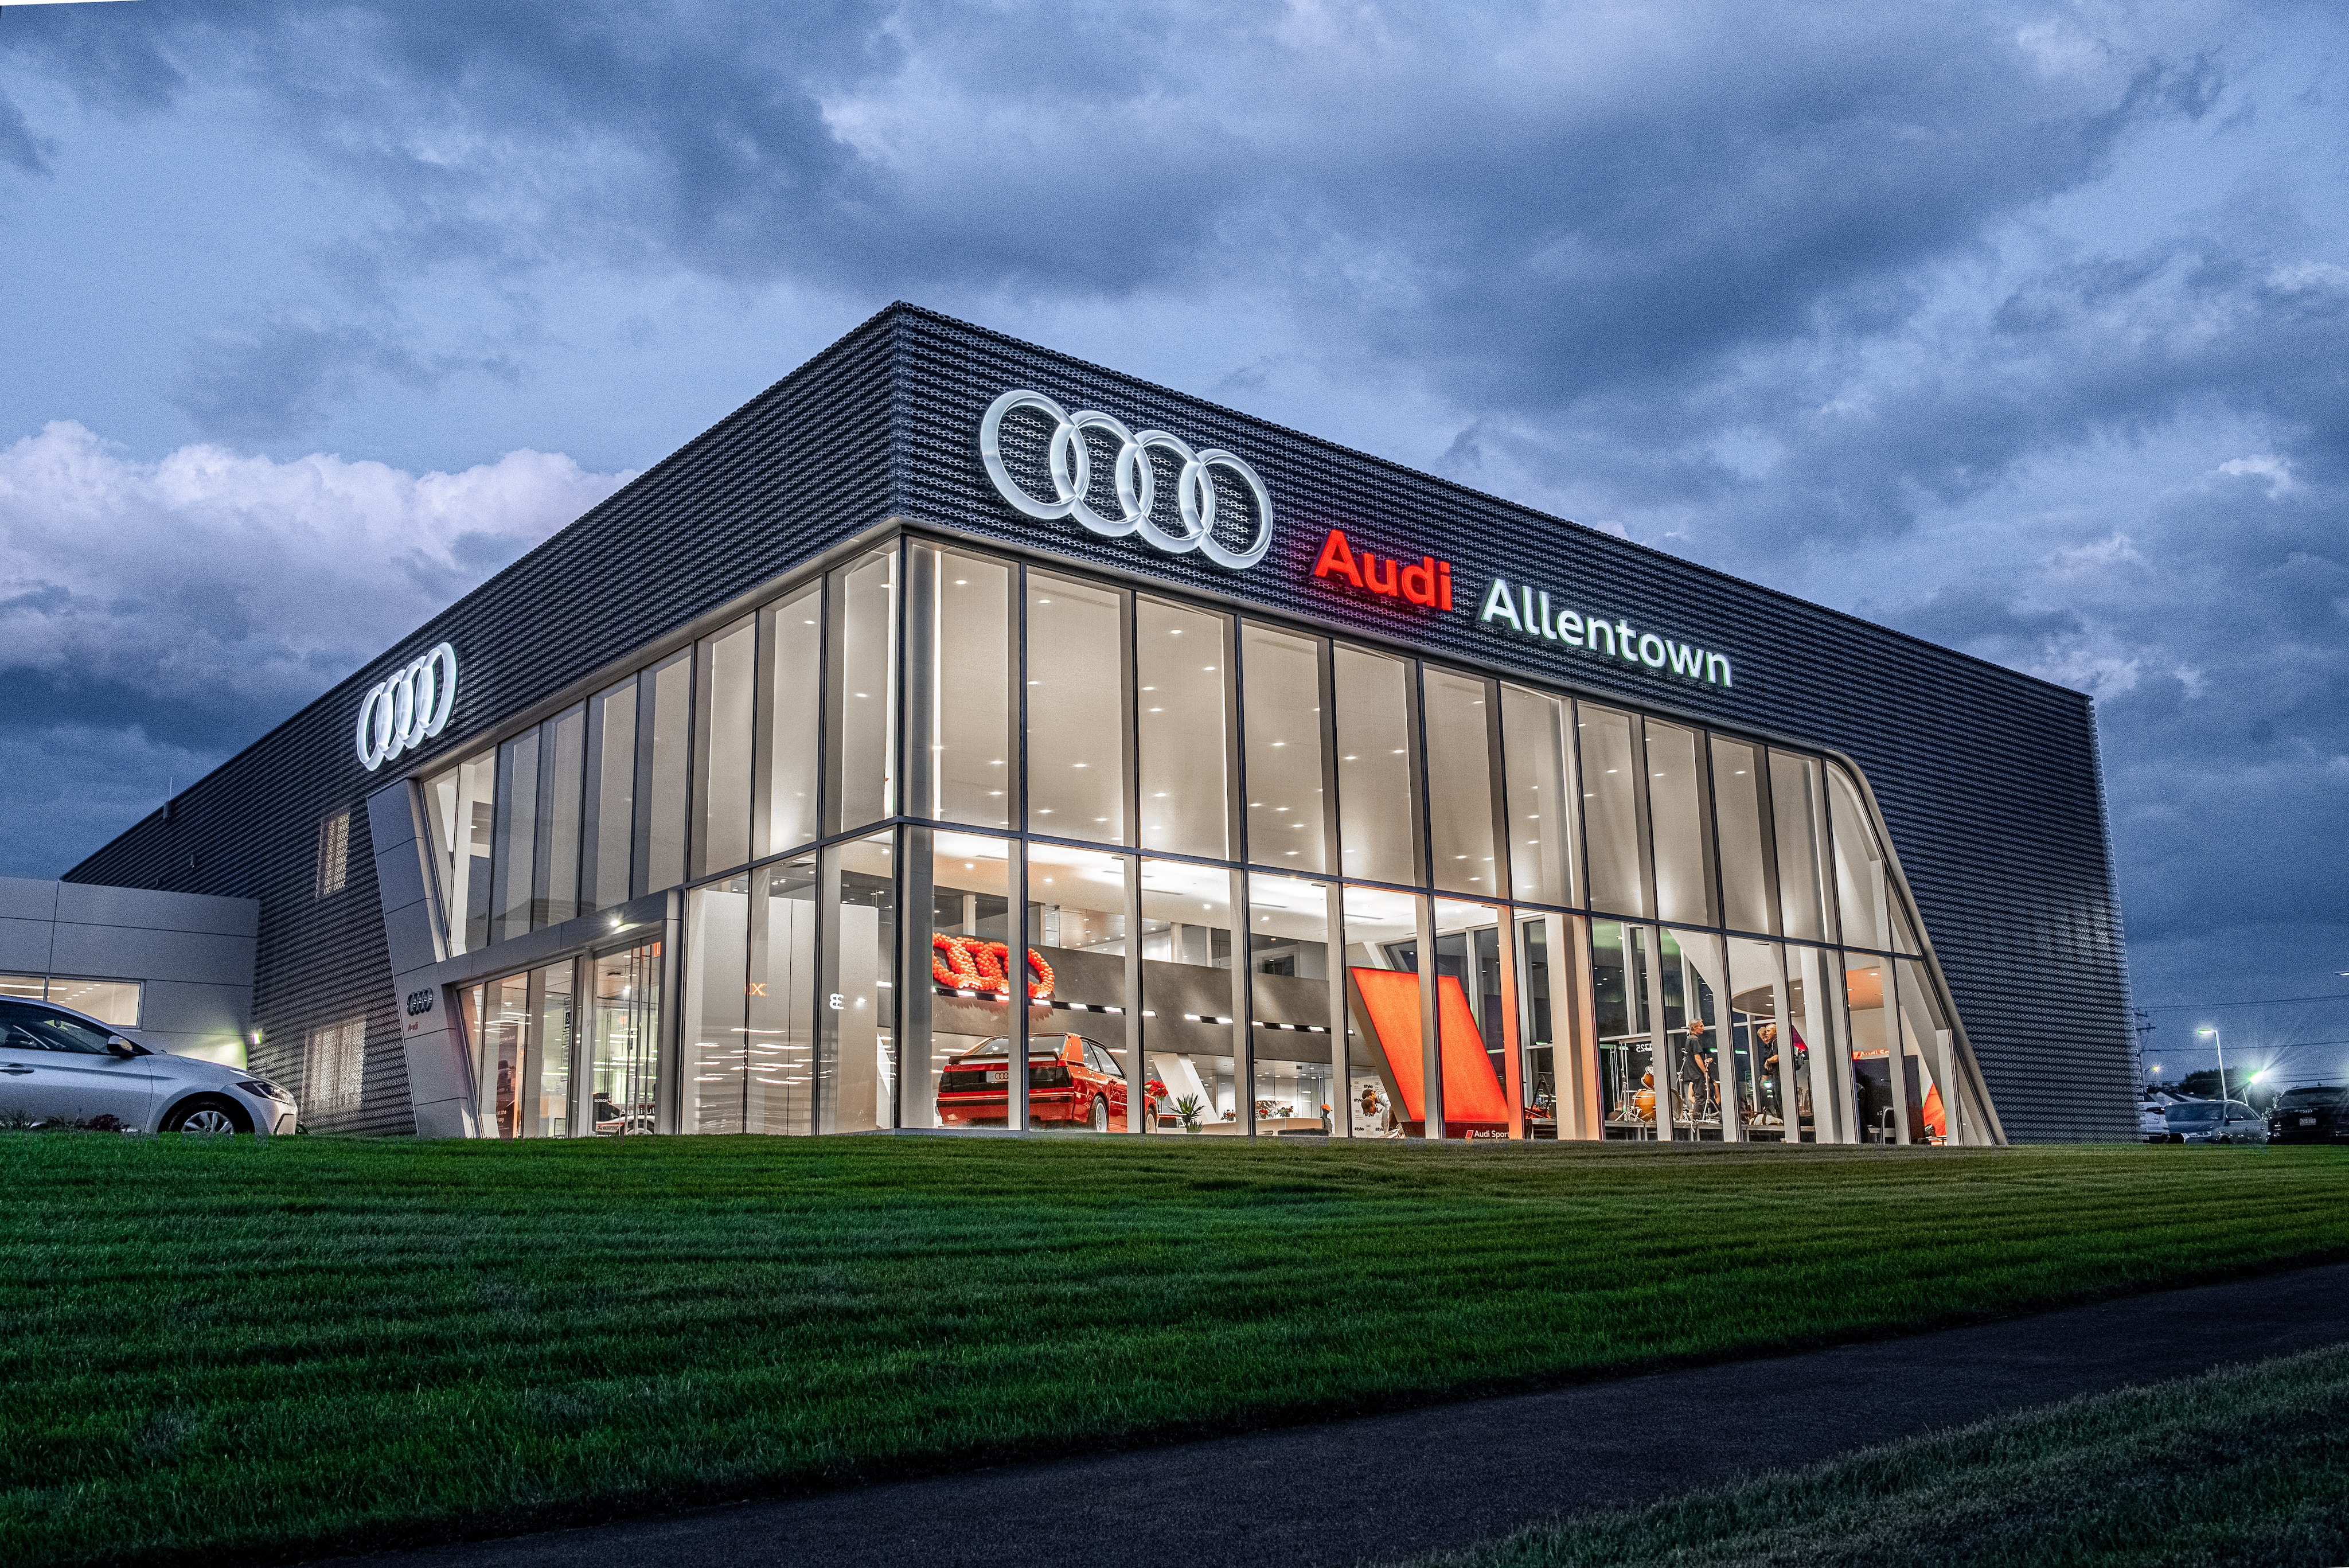 Auto Repairs Audi Peninsula